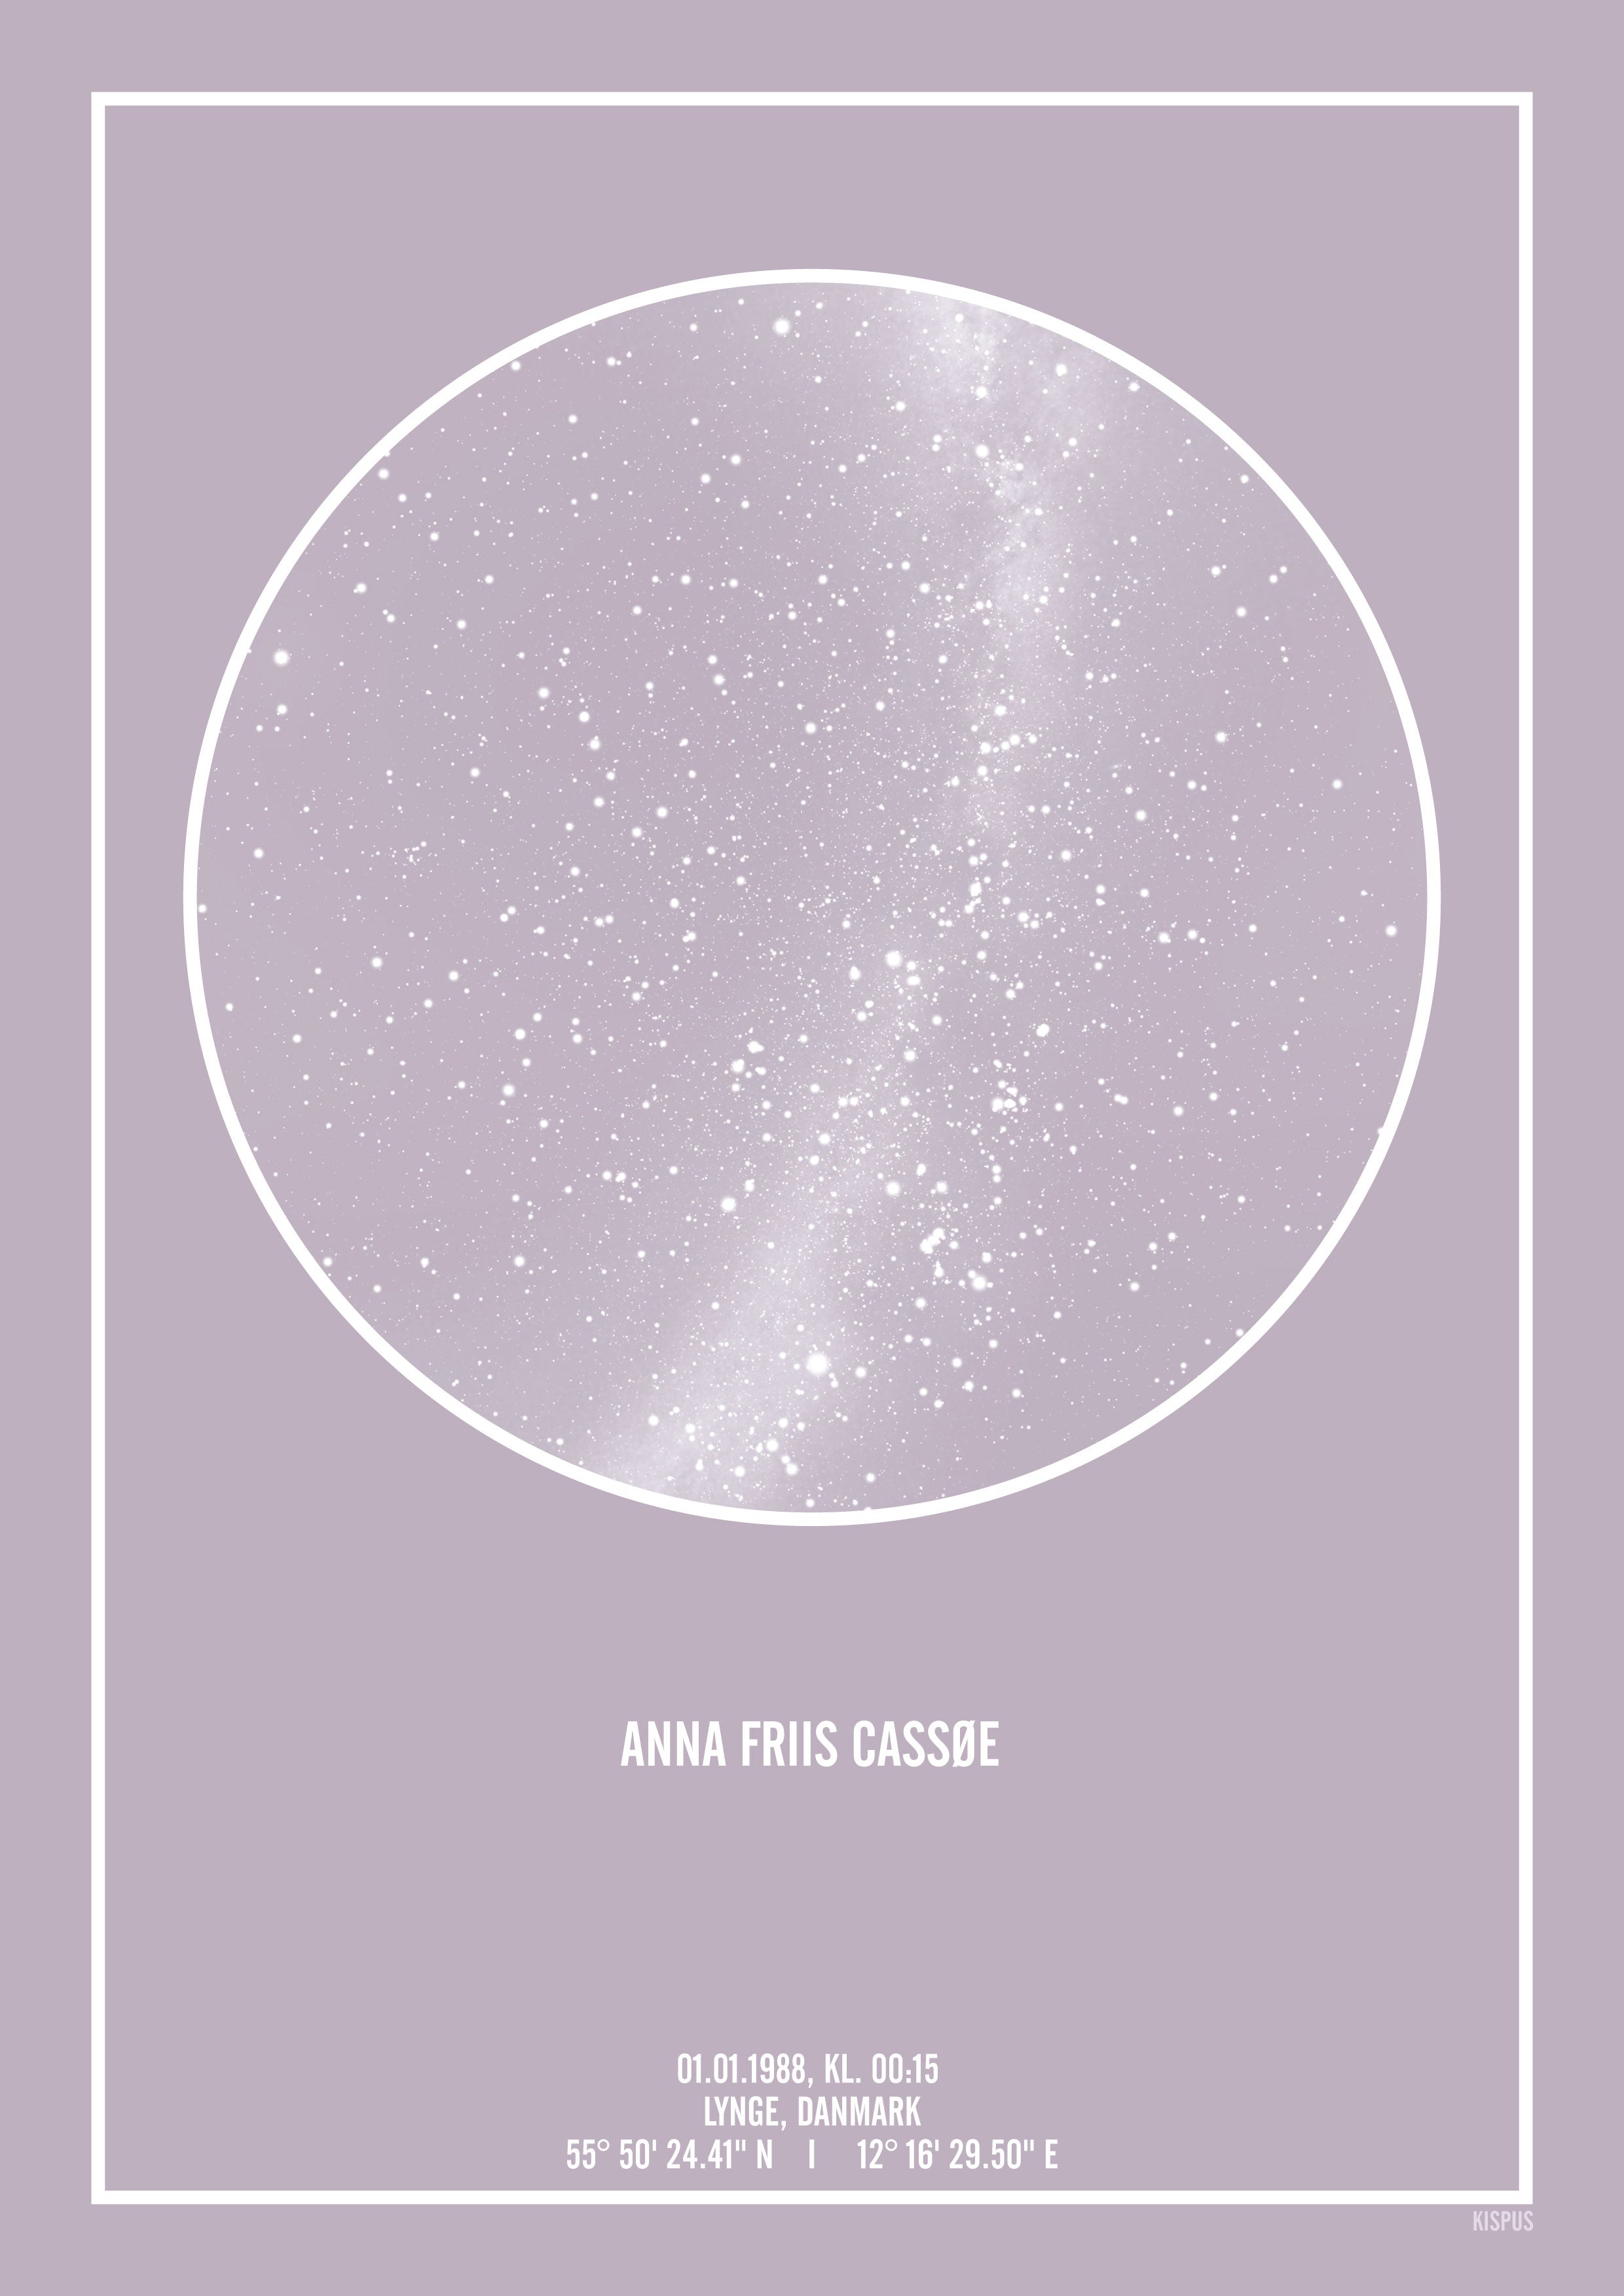 Se PERSONLIG STJERNEHIMMEL PLAKAT (LYSELILLA) - 50x70 / Hvid tekst og lyselilla stjernehimmel / Stjernehimmel med mælkevej hos KISPUS